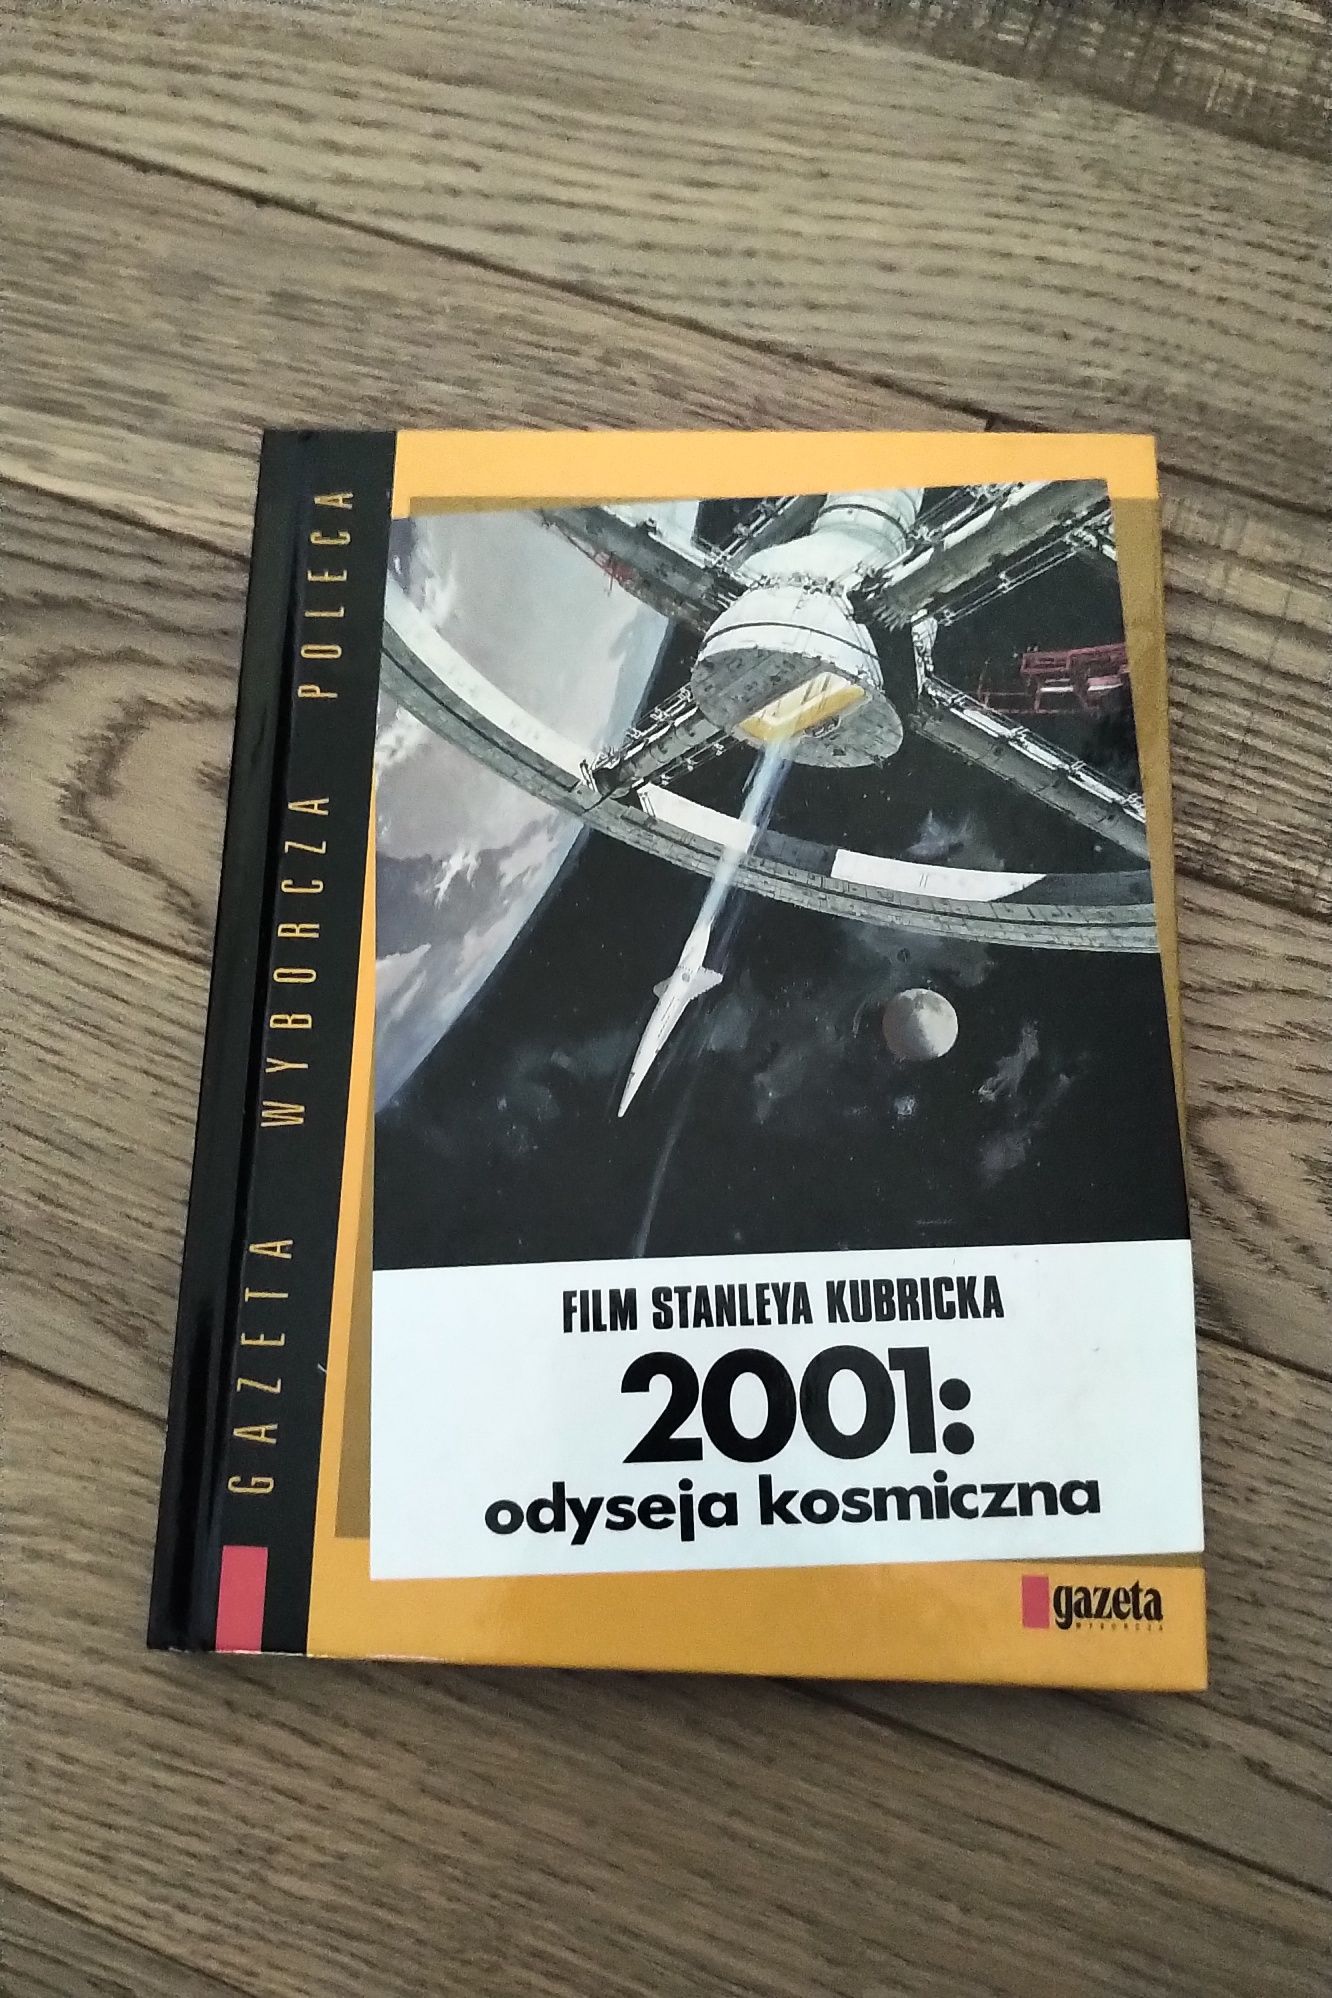 2001 odyseja kosmiczna stanley kubrick film dvd plyta